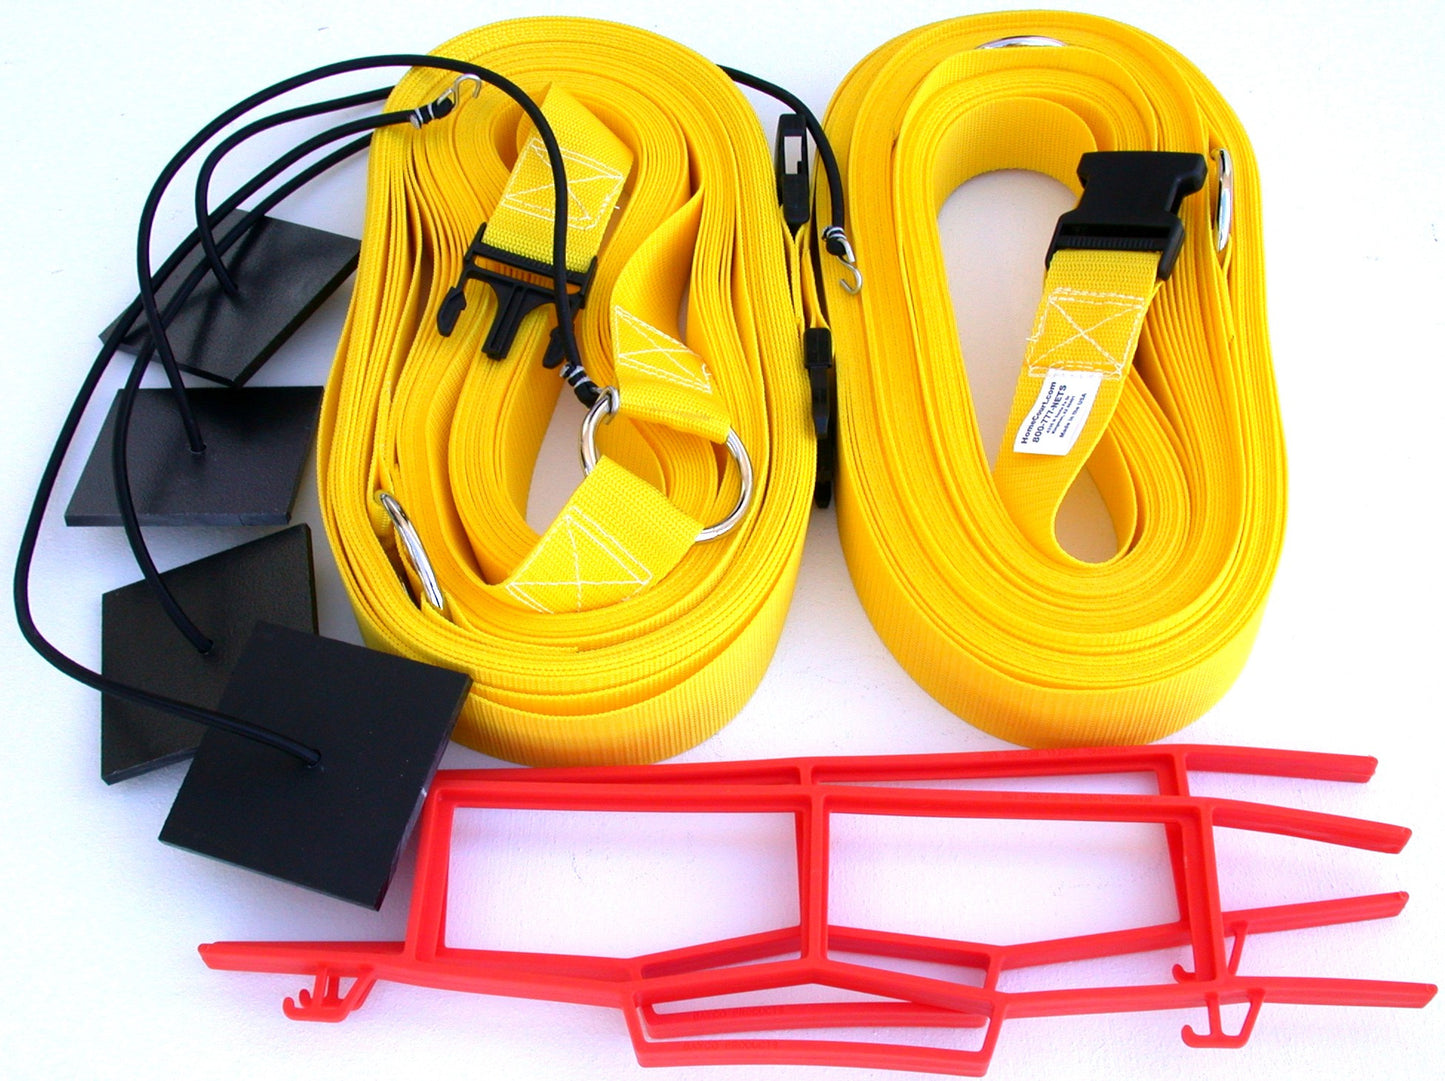 19NAYB-yellow 2-inch non-adjustable web boundary, sand plates, storage winders